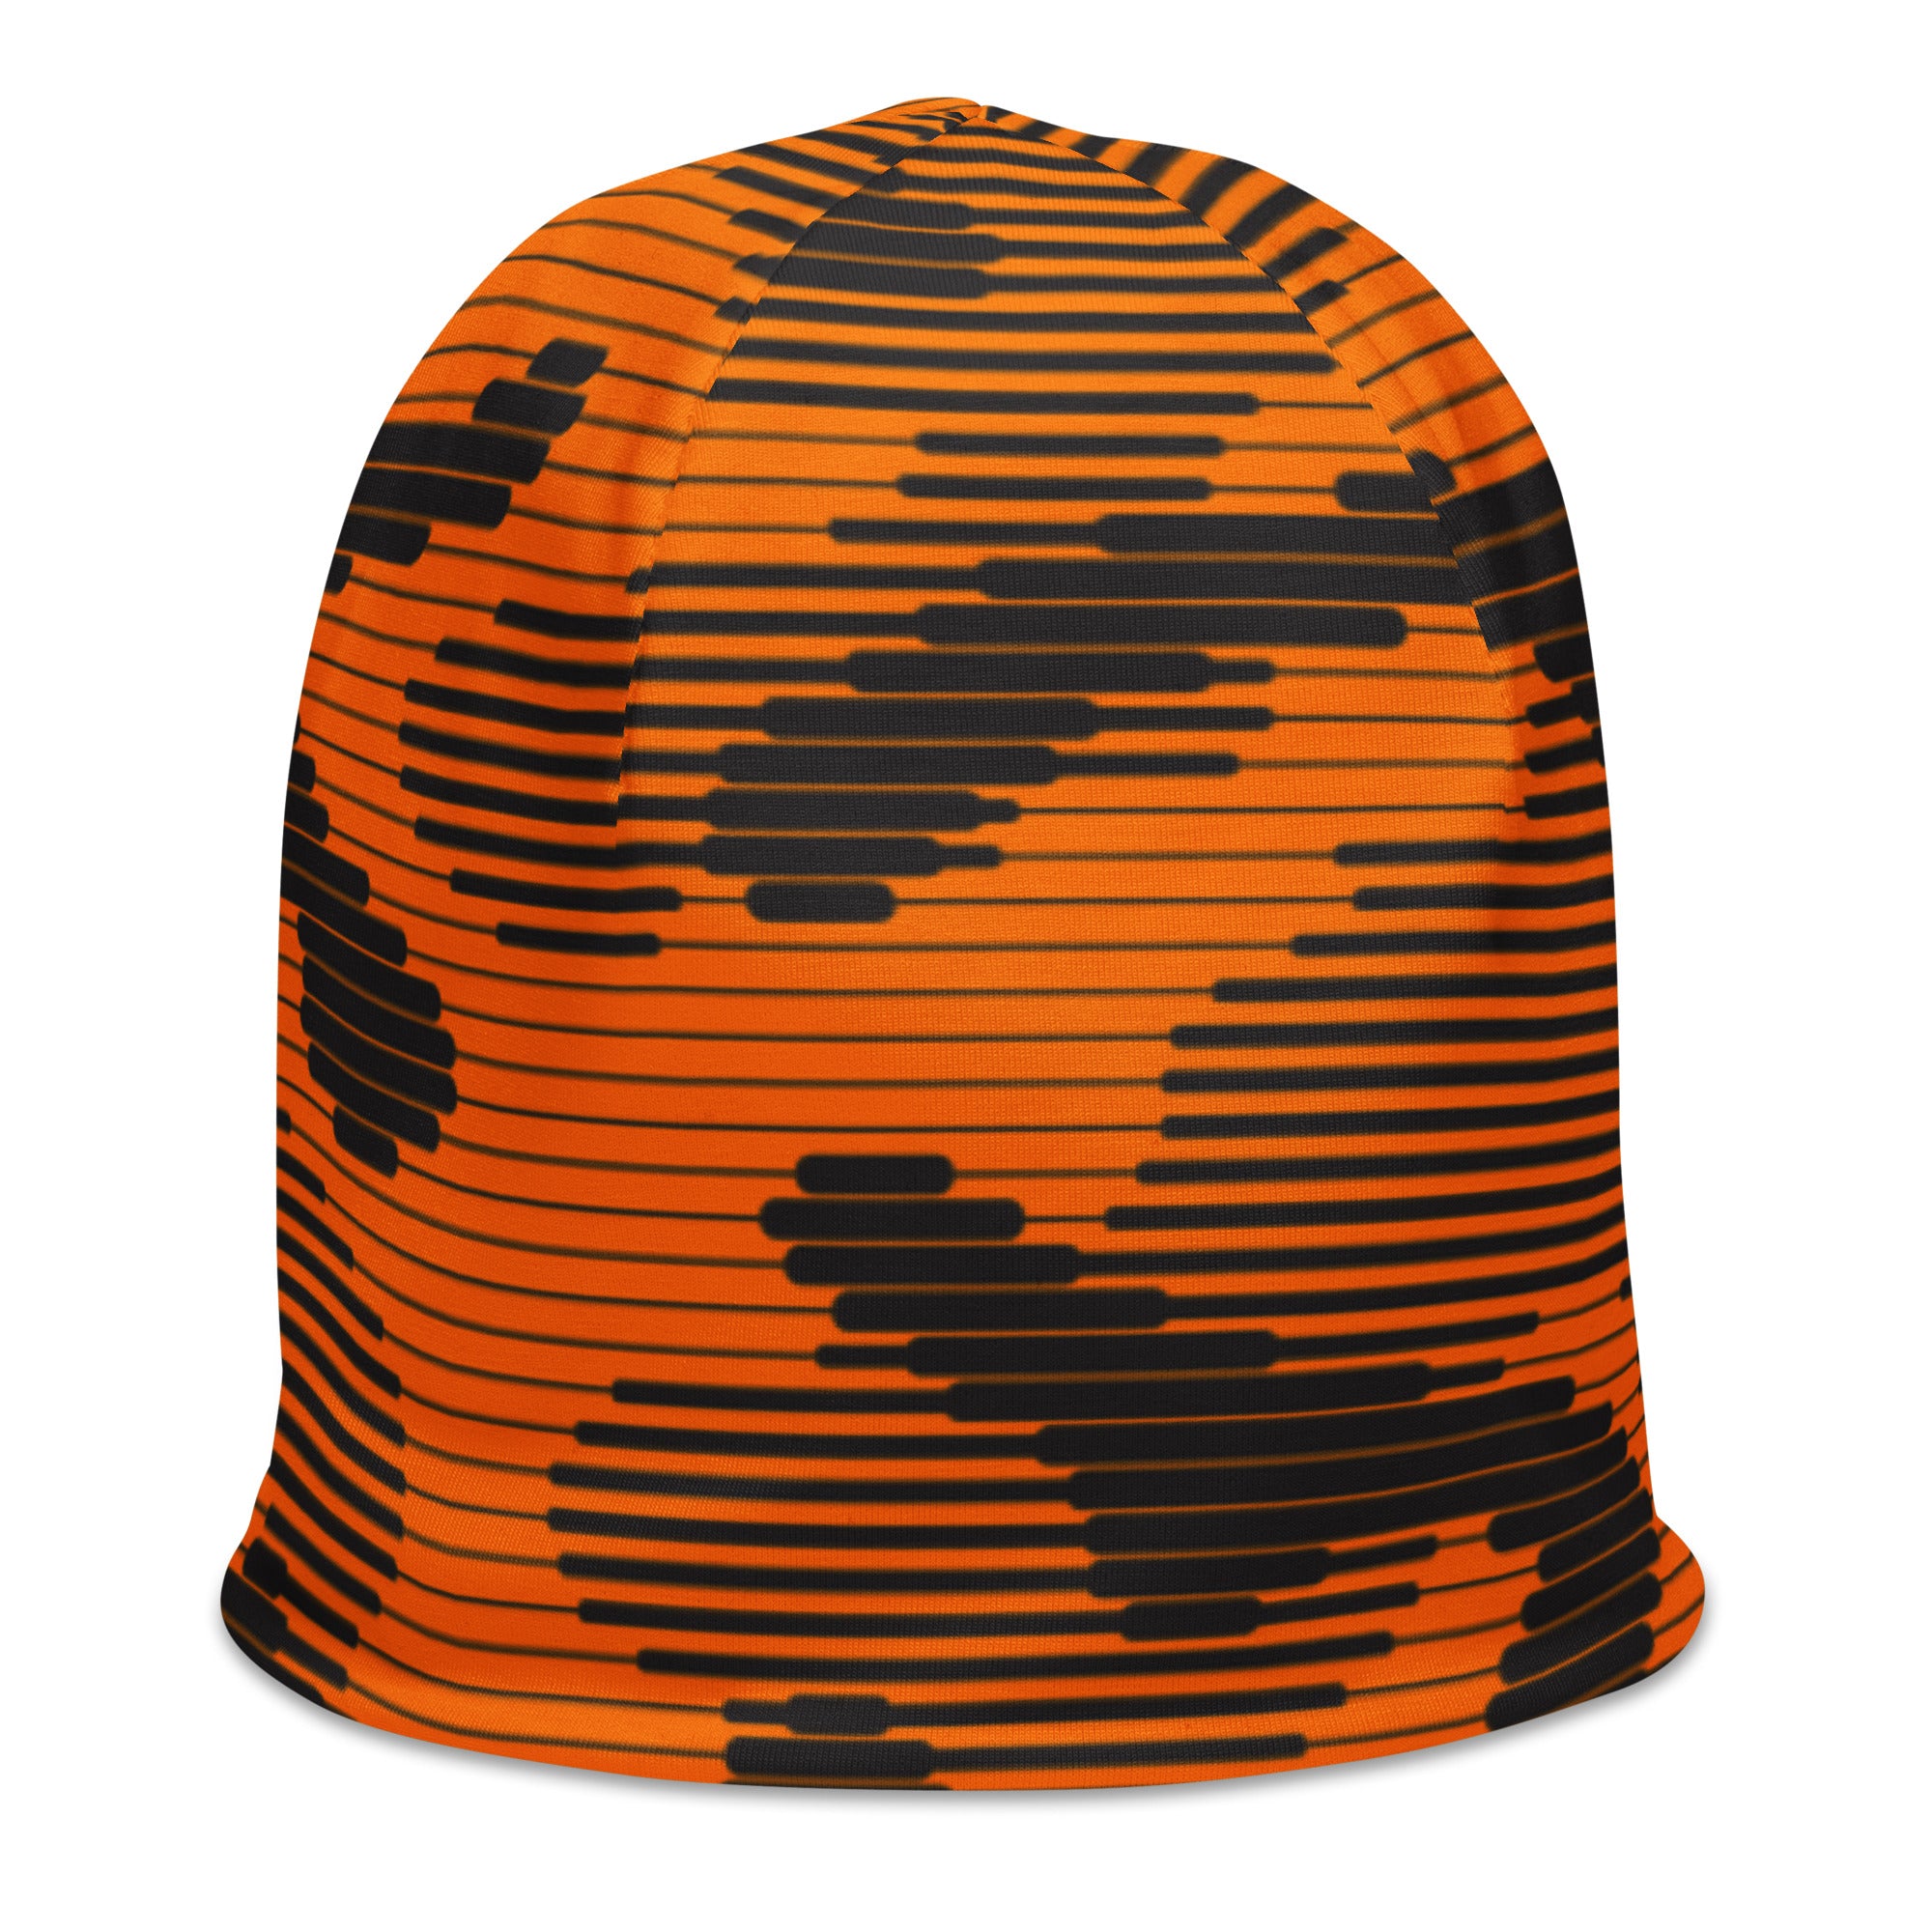 Digital Camouflage Blaze Orange Beanie